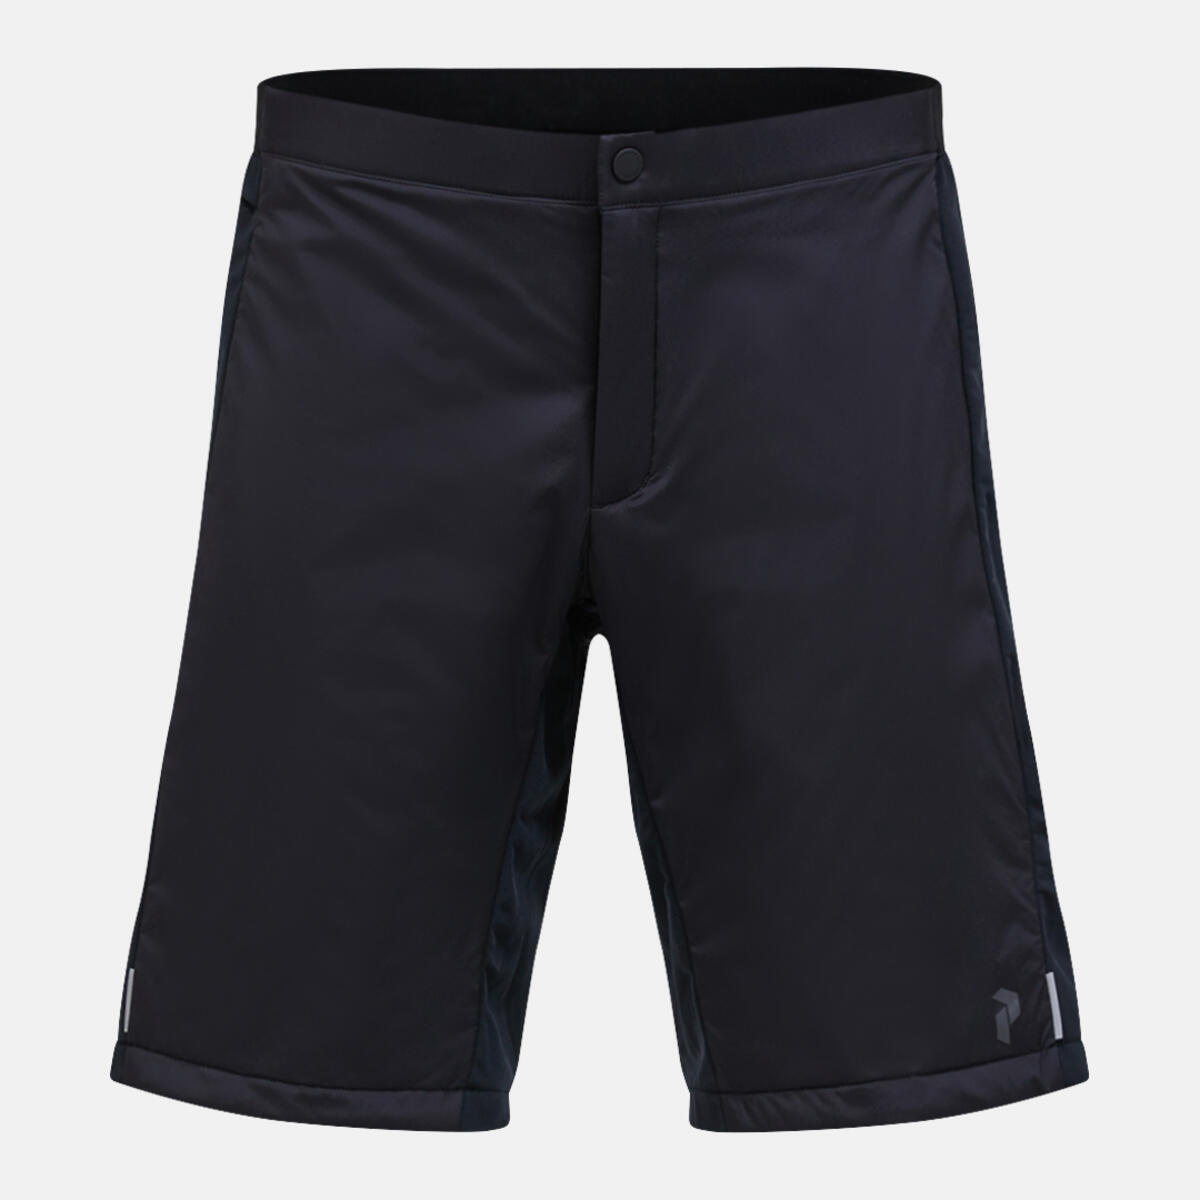 Vivid Thermal Shorts Men Black - Leisure 